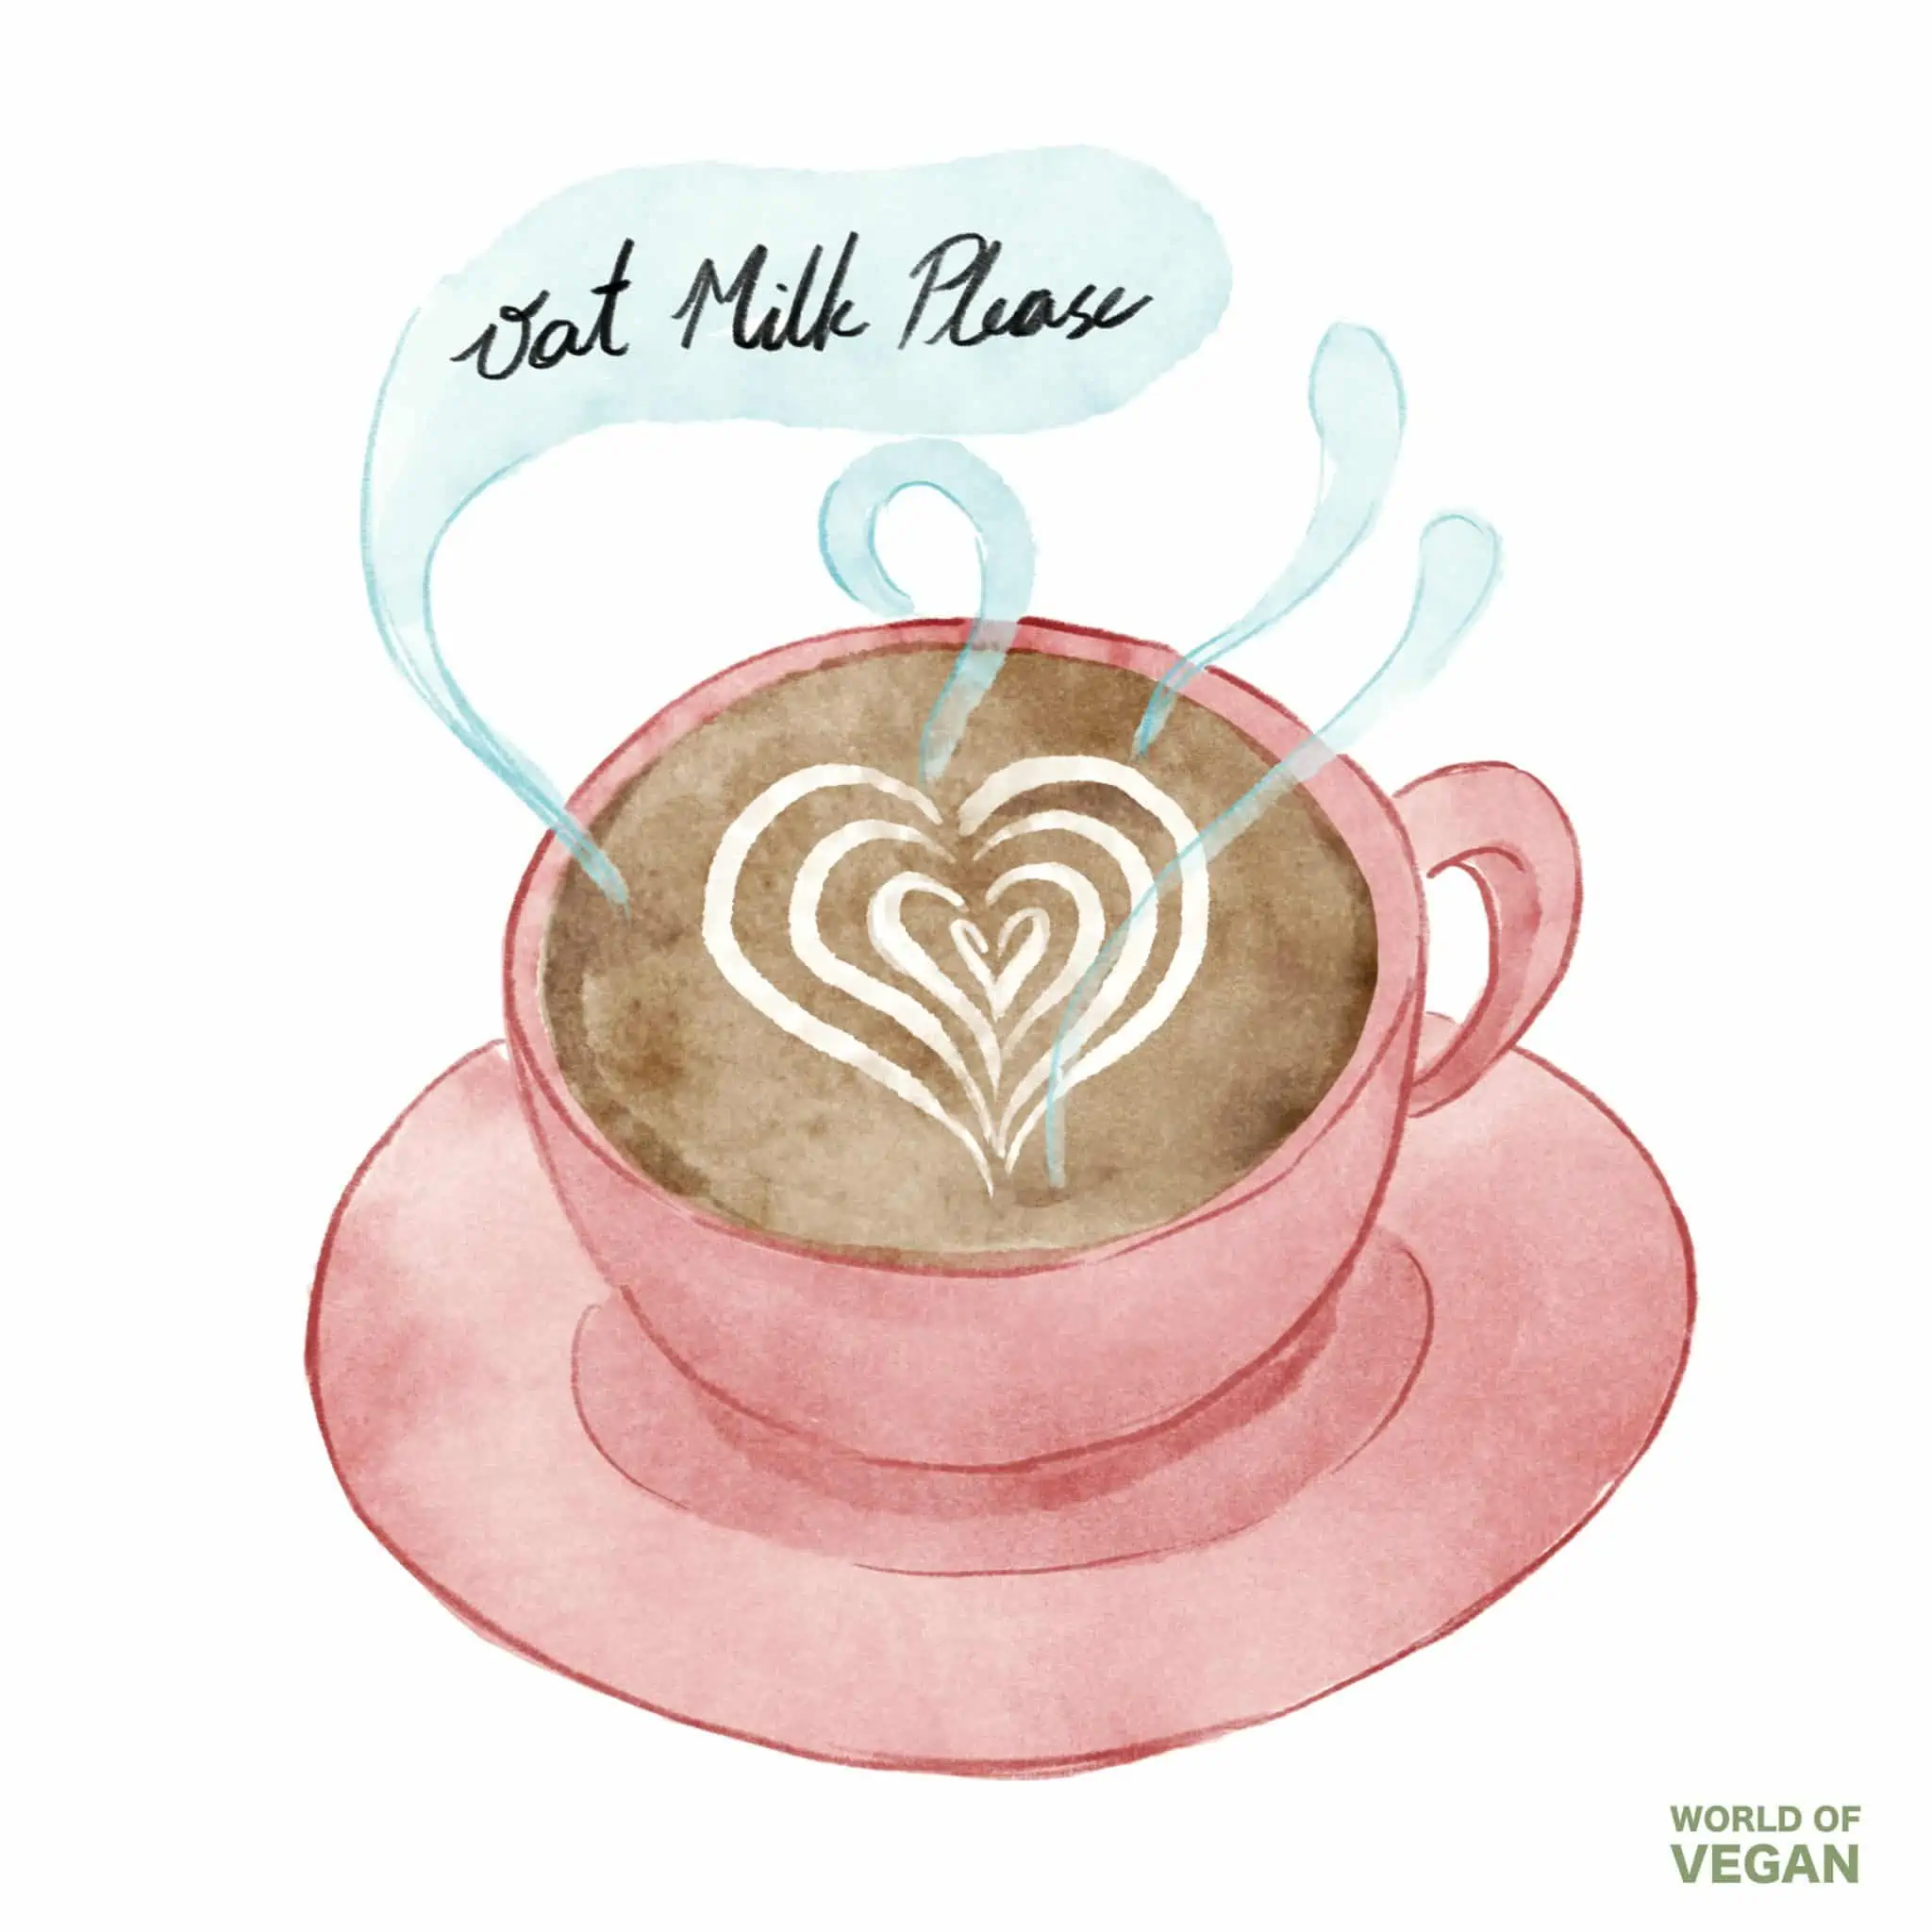 Vegan art illustration of an oat milk latte in a pink coffee mug with a heart in the foam. 